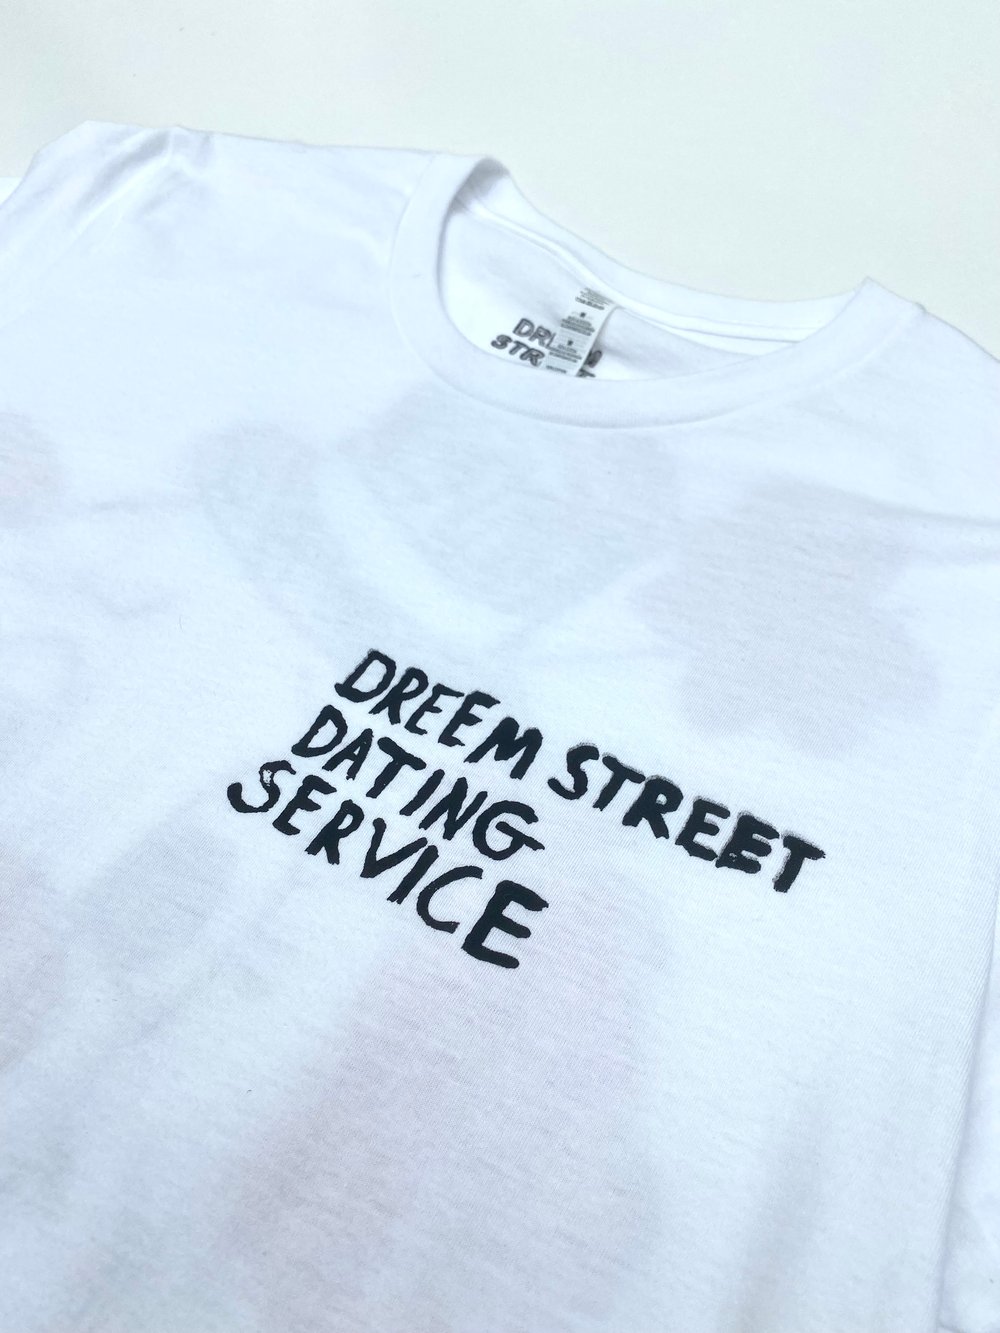 Dreem Street Dating Service T-shirt